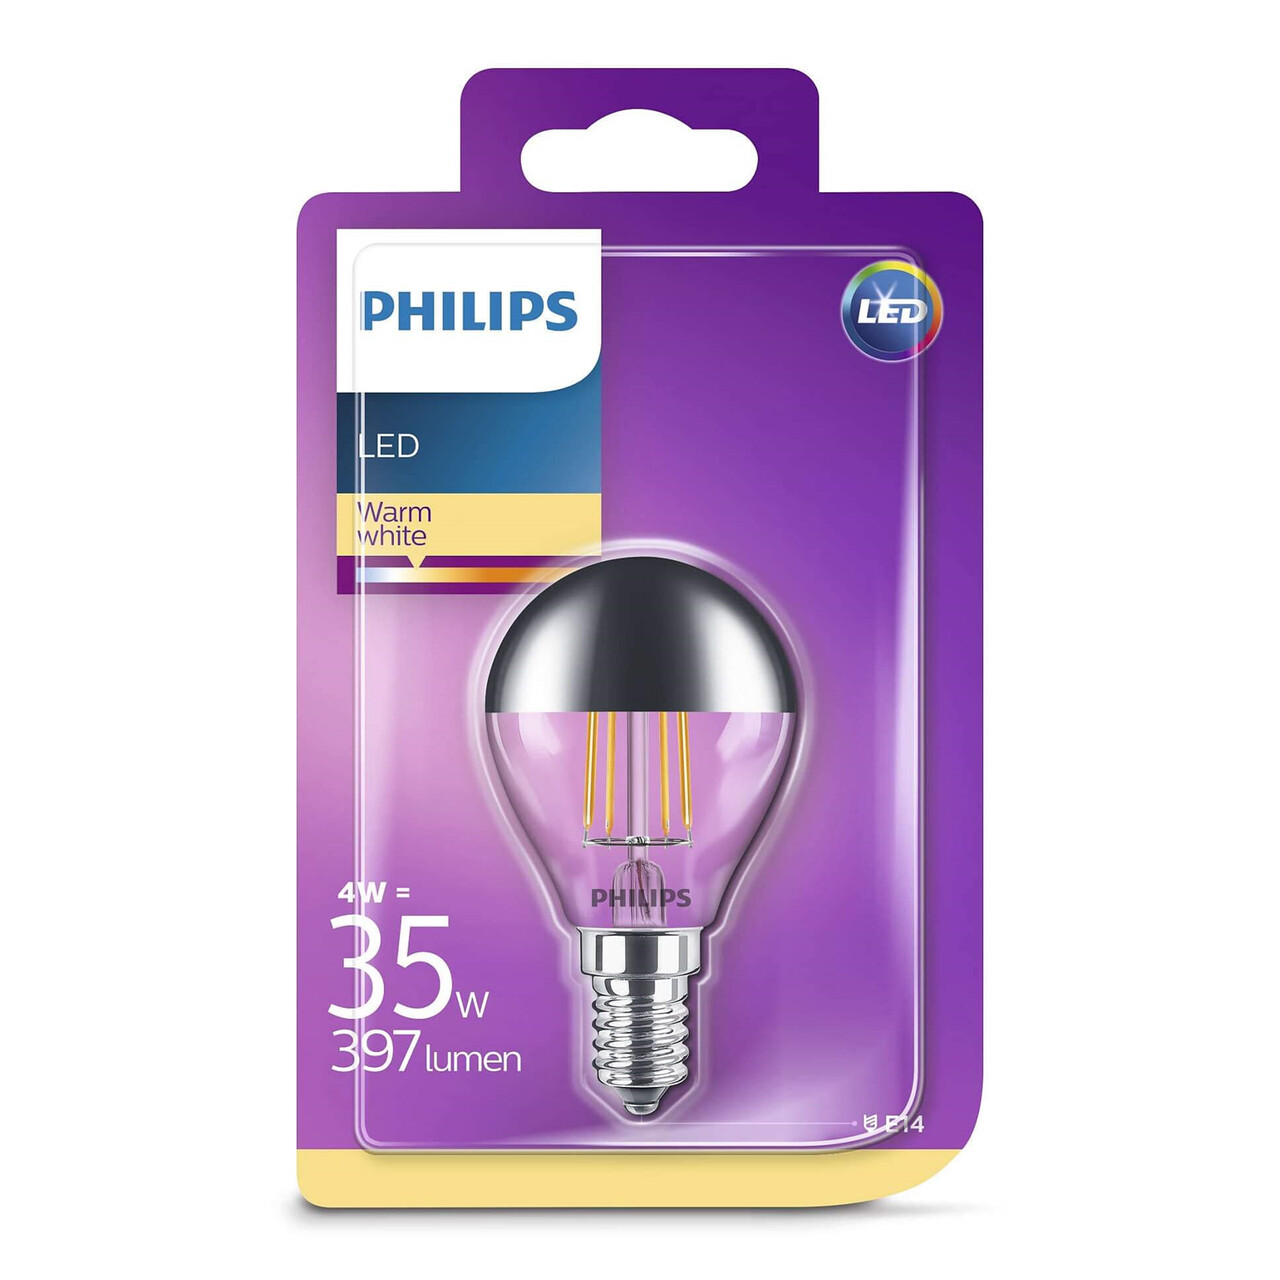 Philips 4g. Led Daily Light 4 Philips.